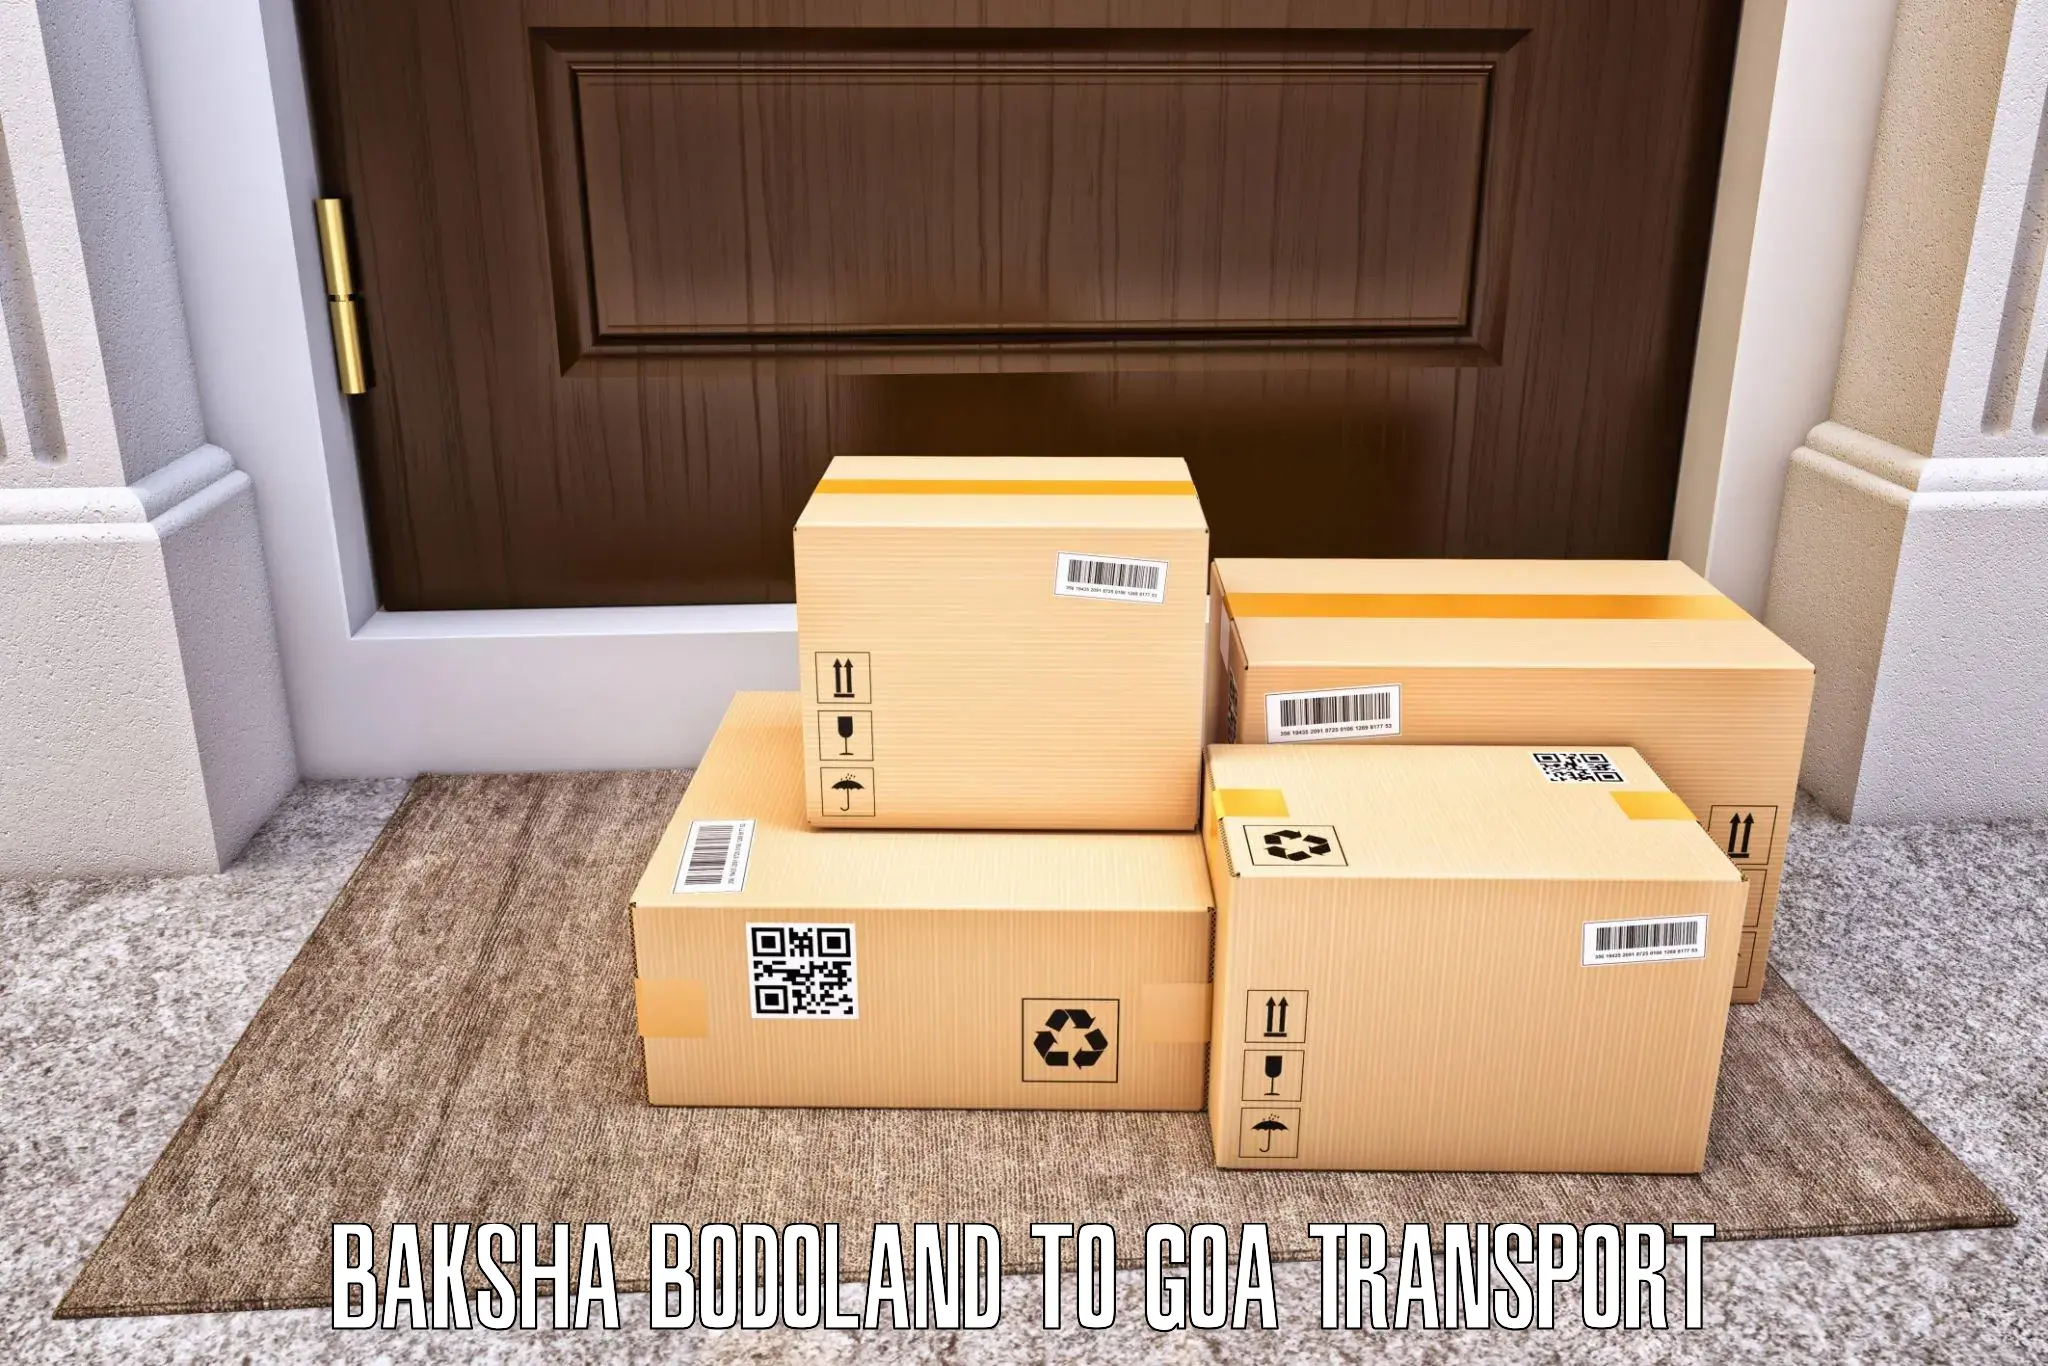 Part load transport service in India Baksha Bodoland to Ponda